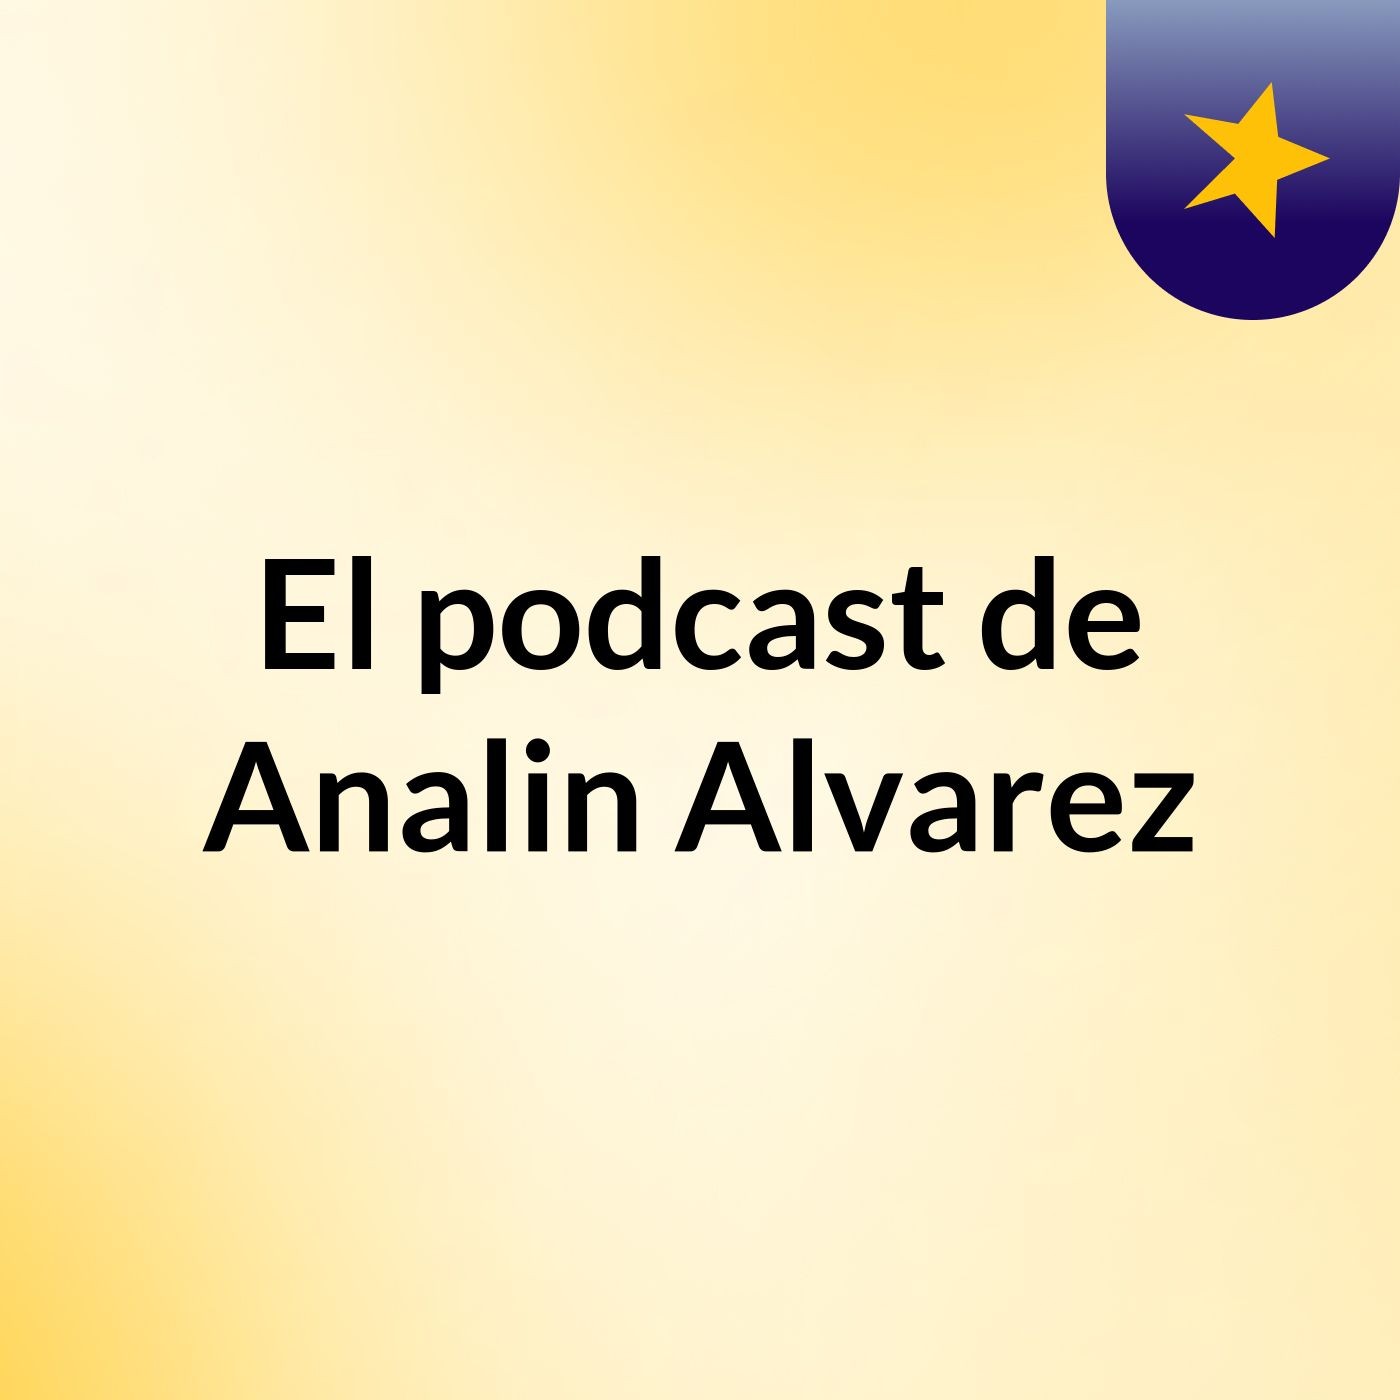 El podcast de Analin Alvarez